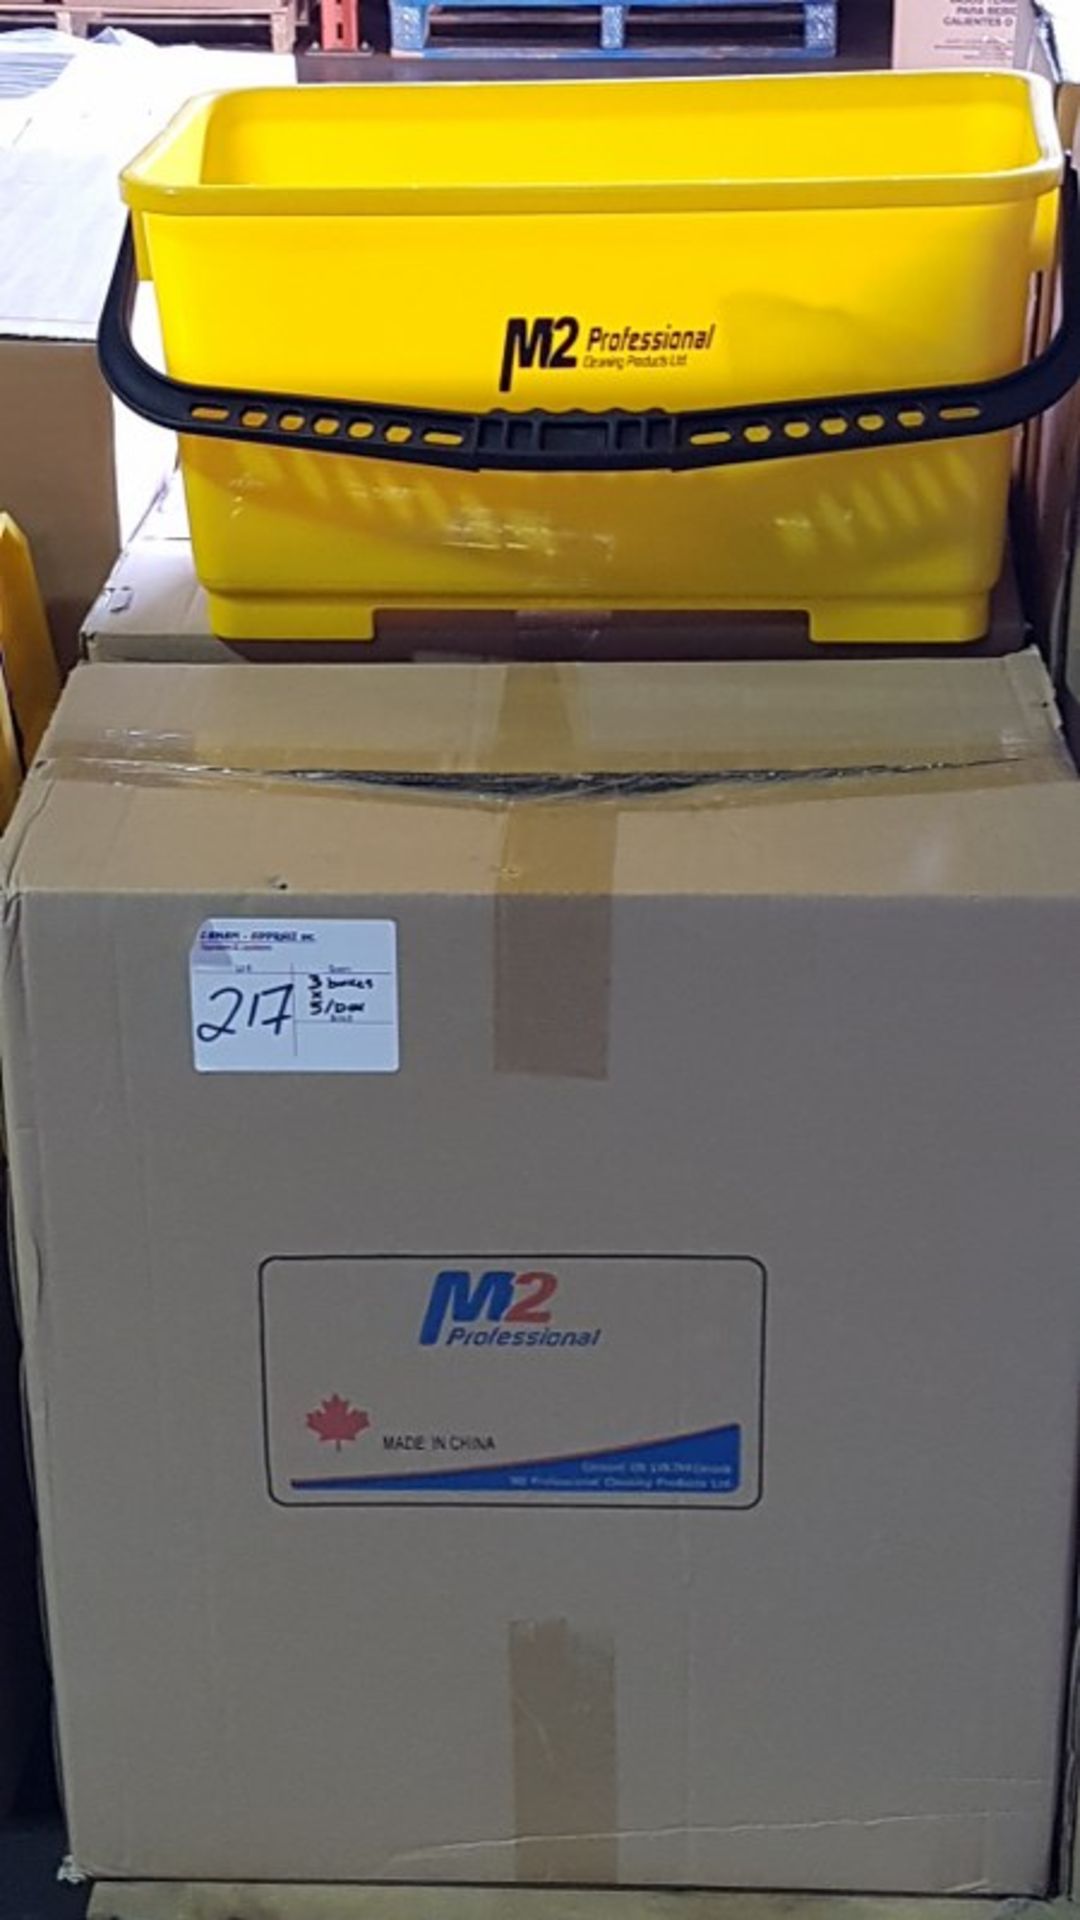 M2 PROFESSIONAL YELLOW BUCKETS - 3 BOXES x 5/BOX